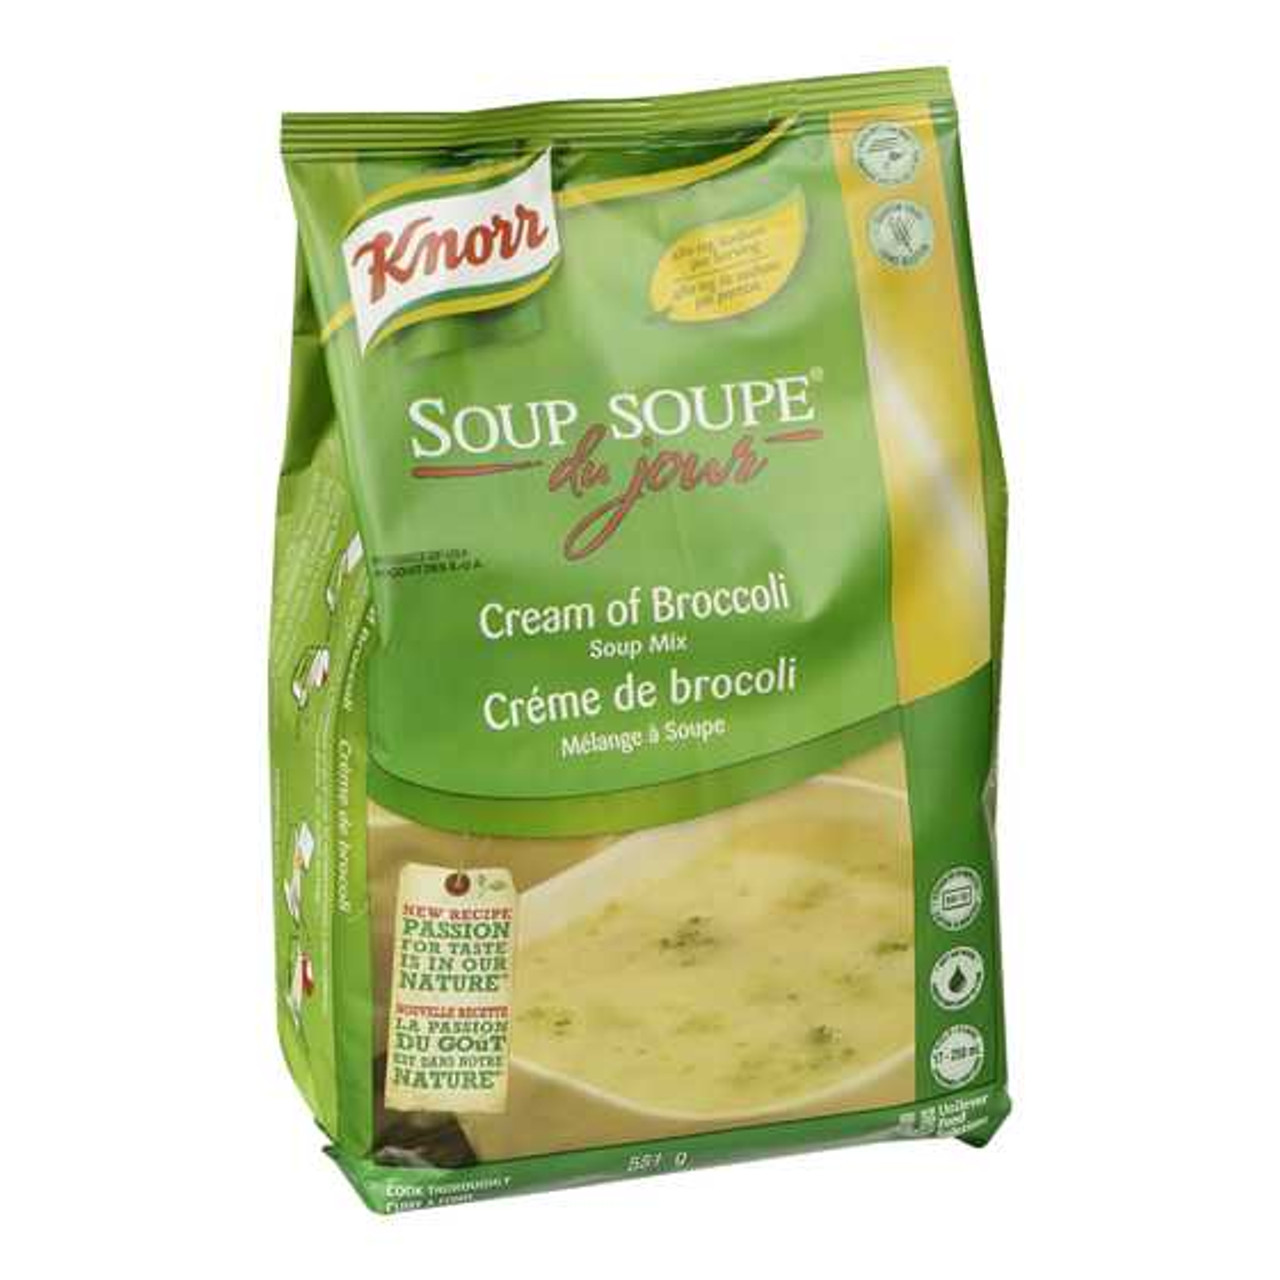 KNORR Cream of Broccoli Soup Mix, Soup Du Jour 551 g KNORR Chicken Pieces